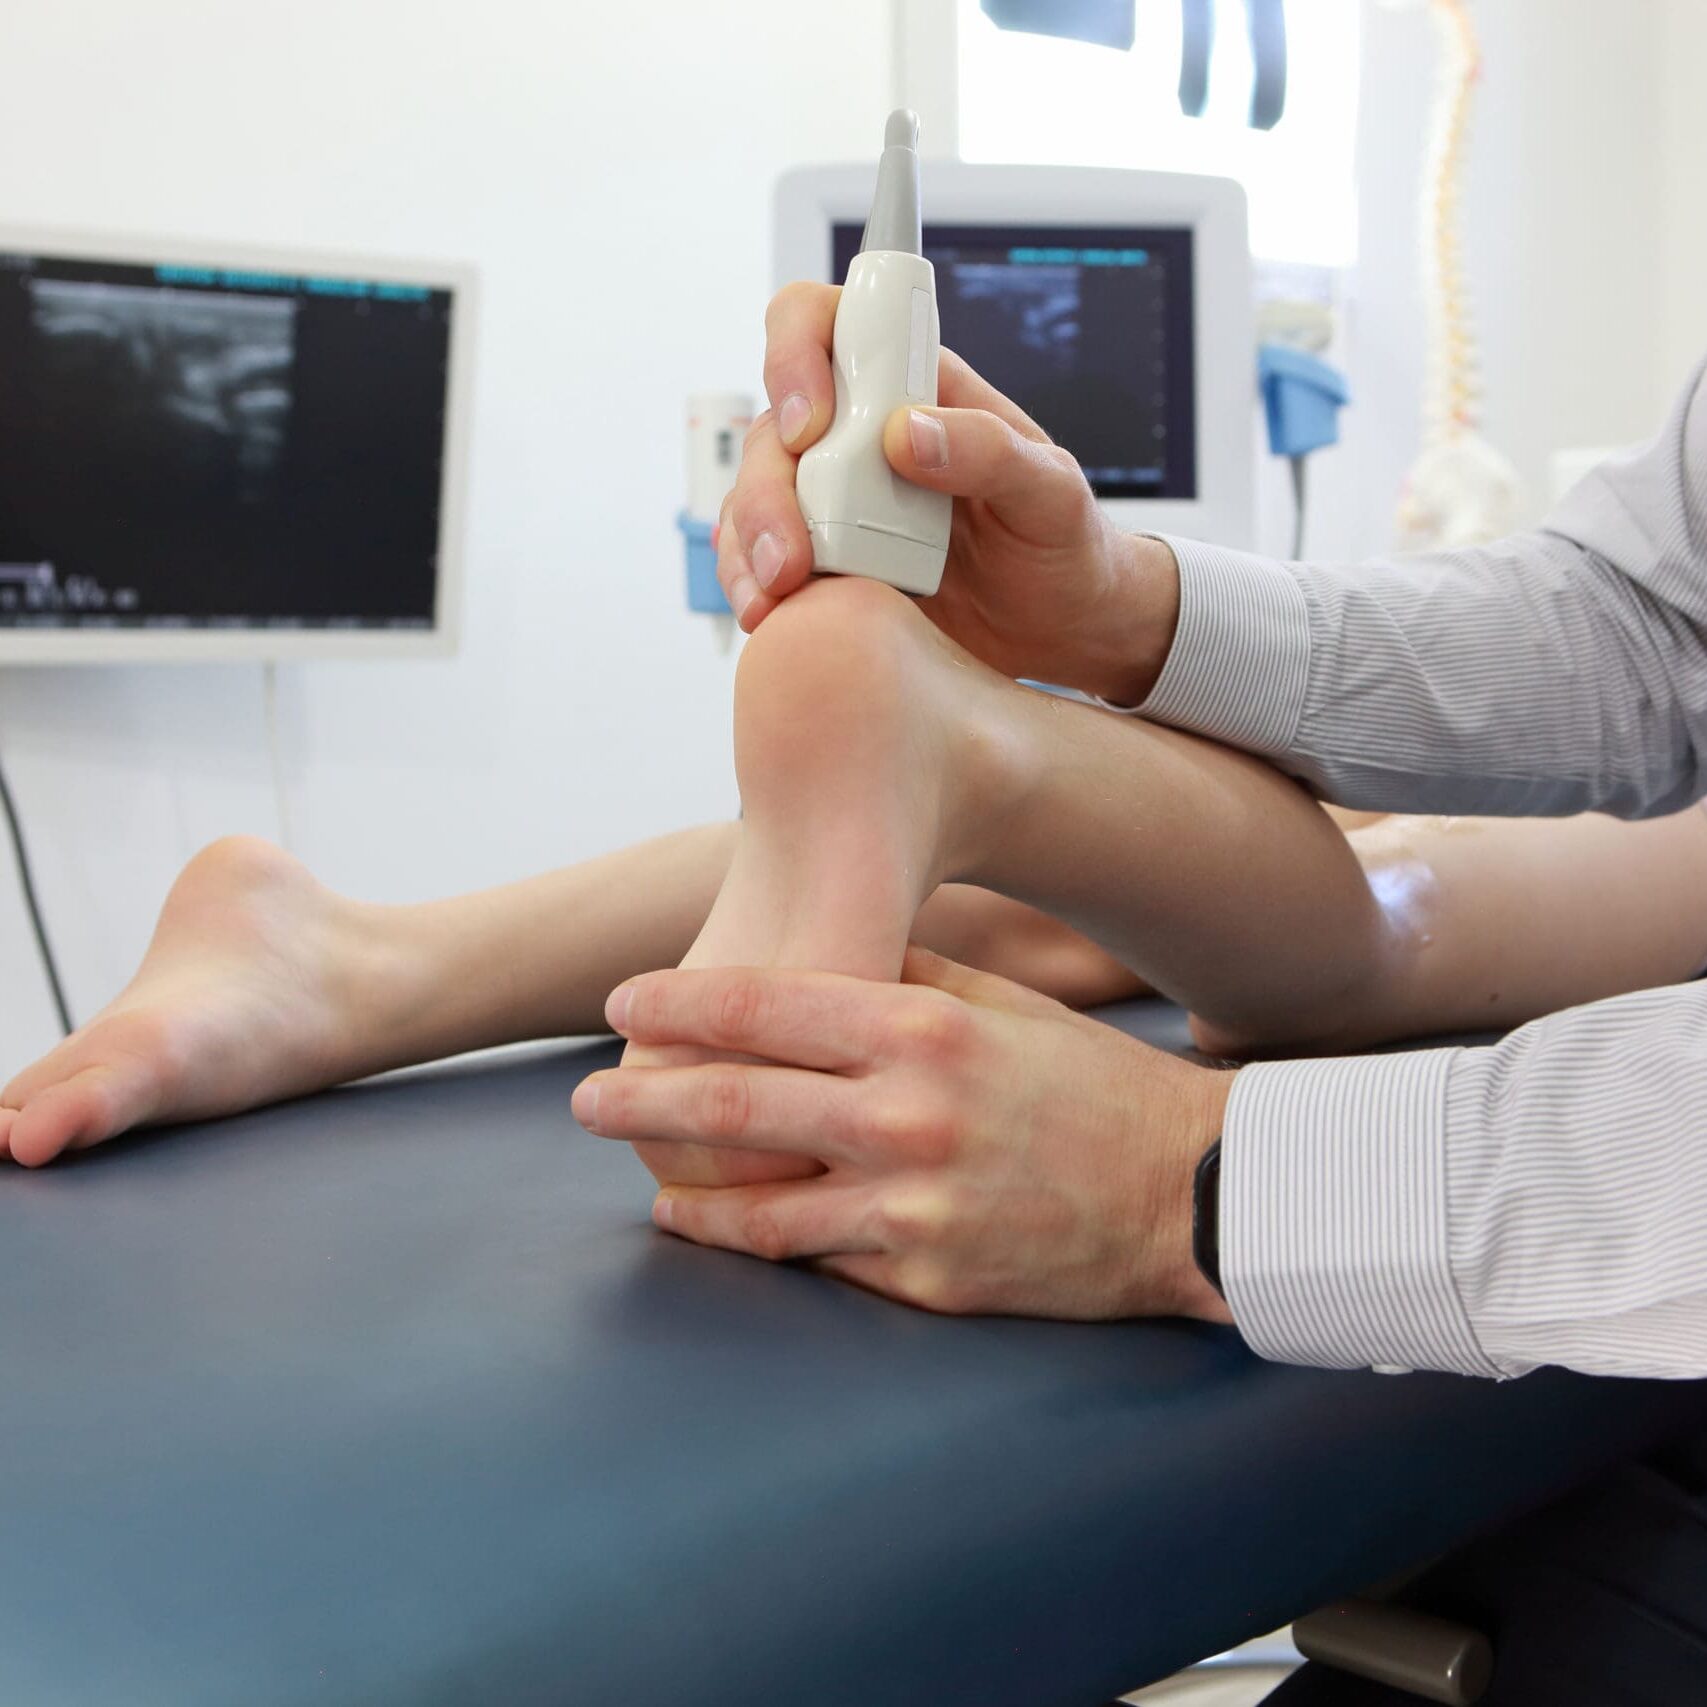 ultrasound of caucasian child's heel - diagnosis